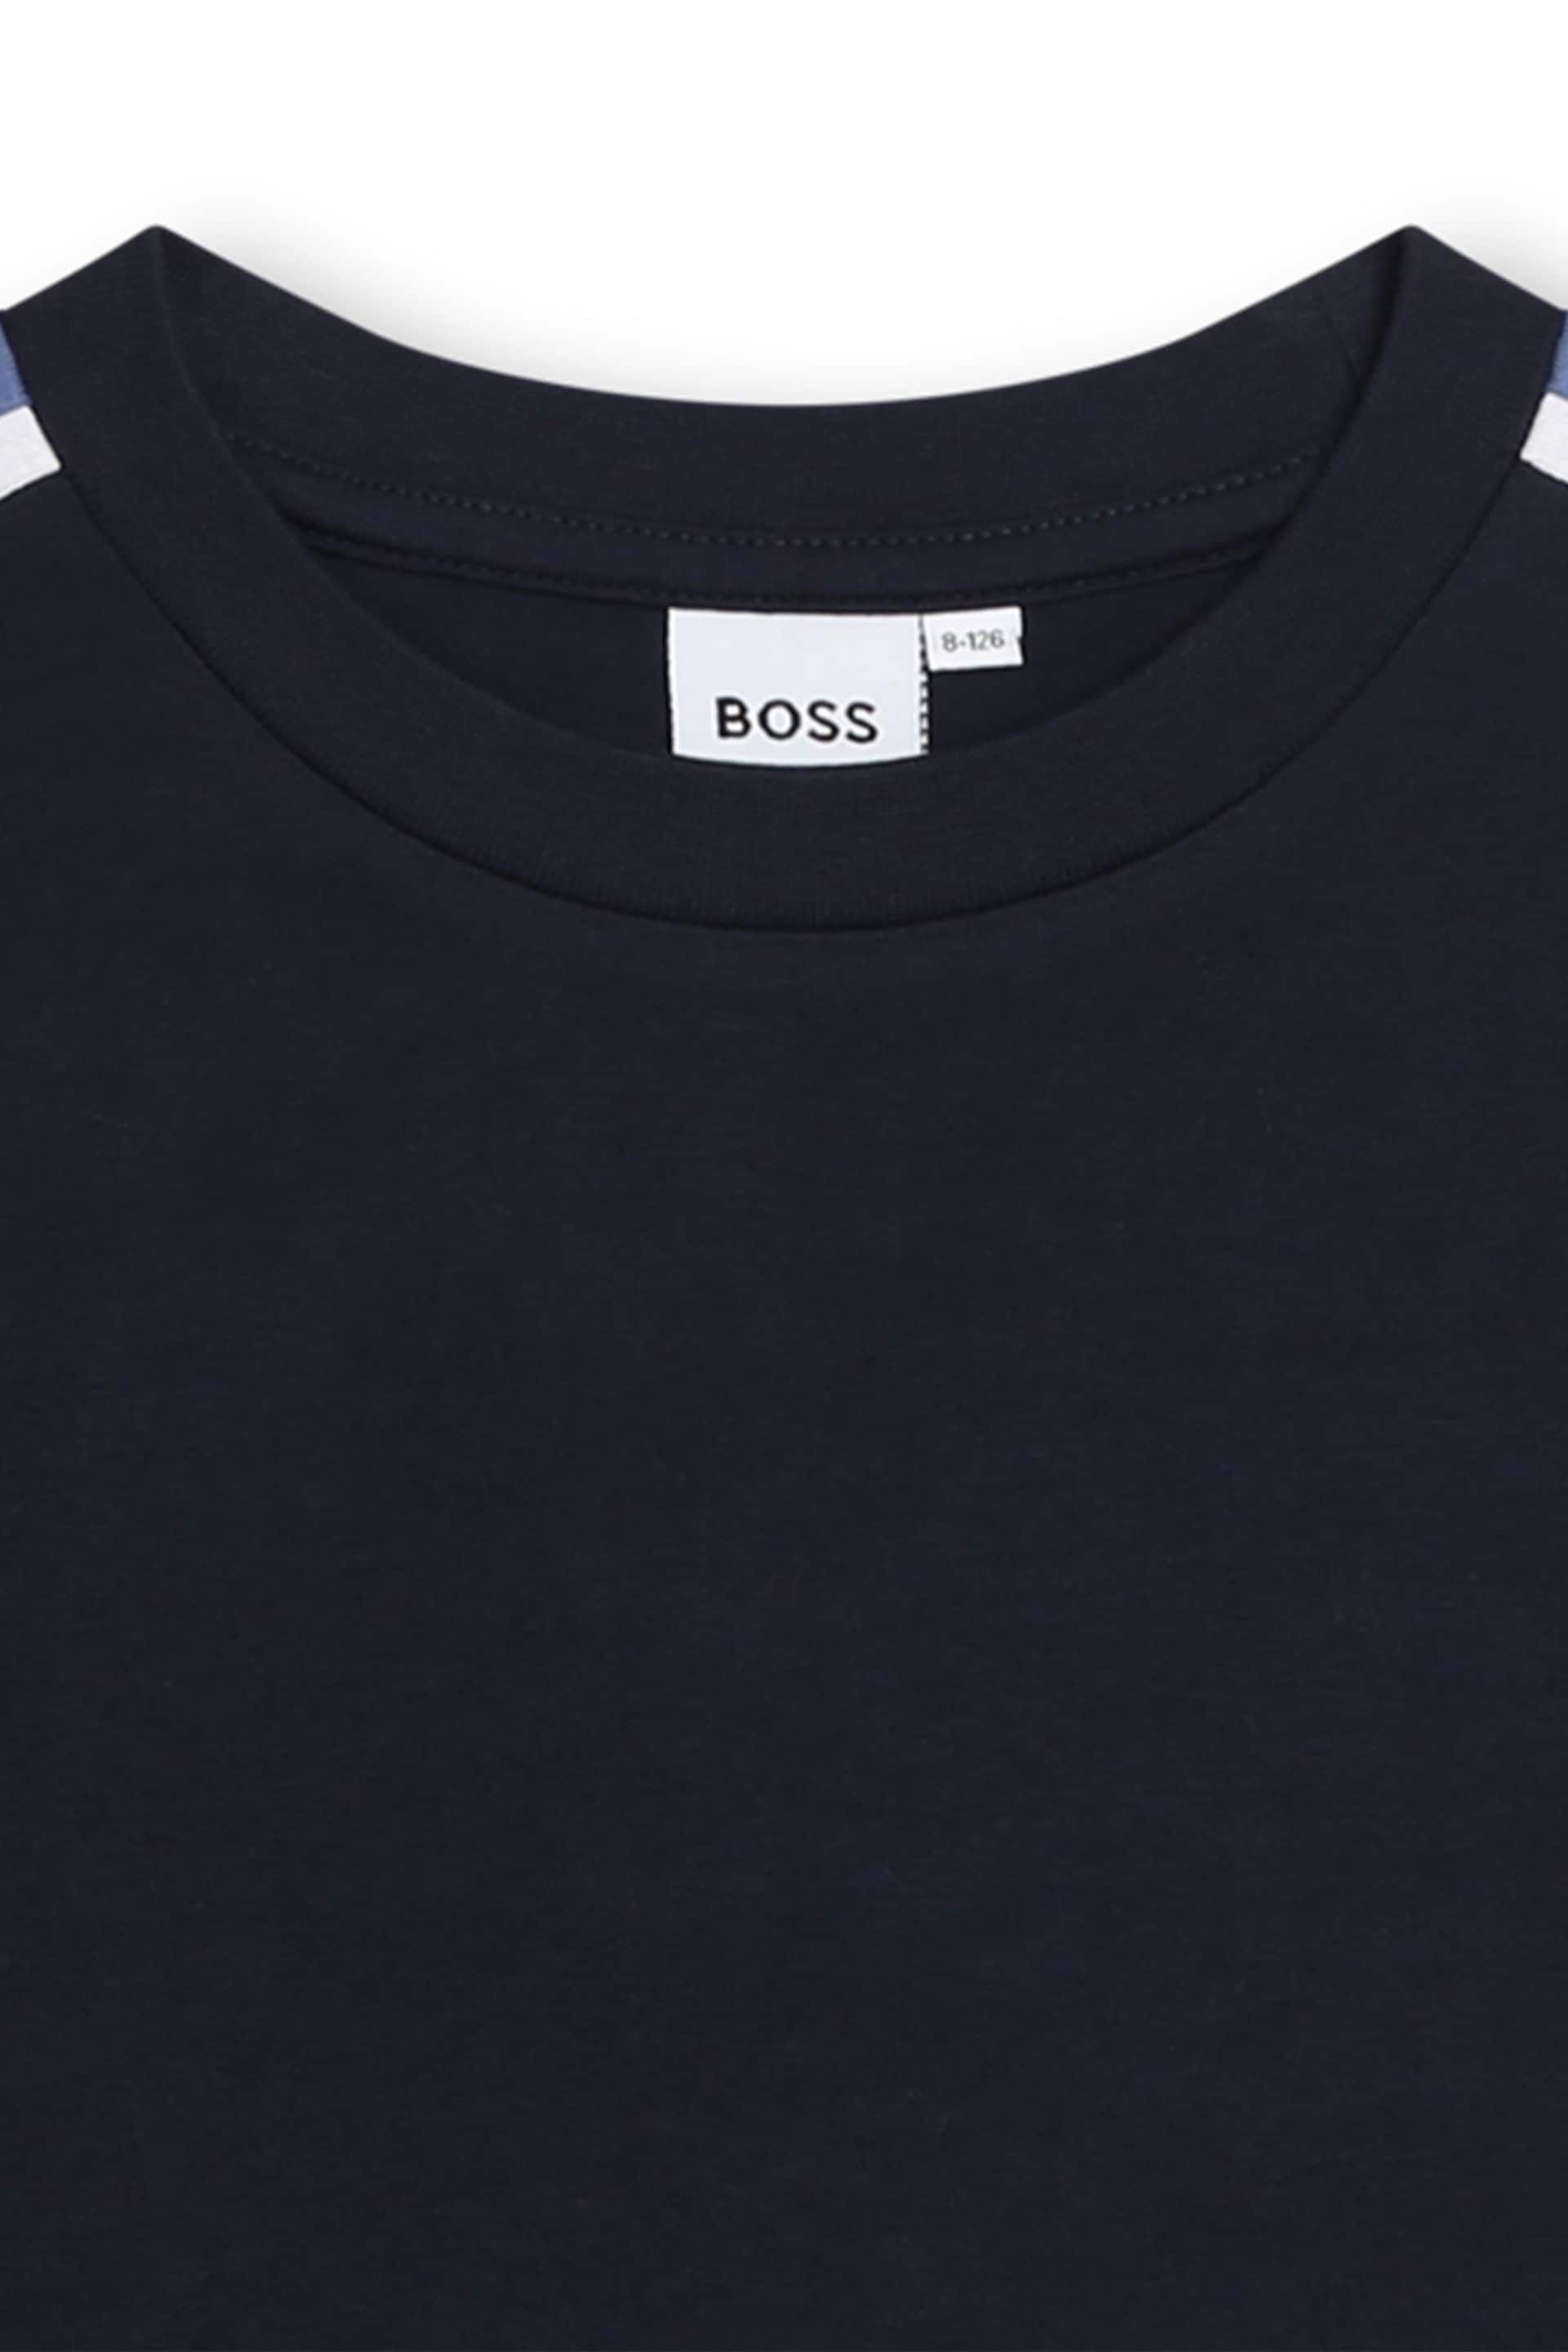 BOSS Blue Short Sleeved Colourblock Logo T-Shirt - Image 3 of 3